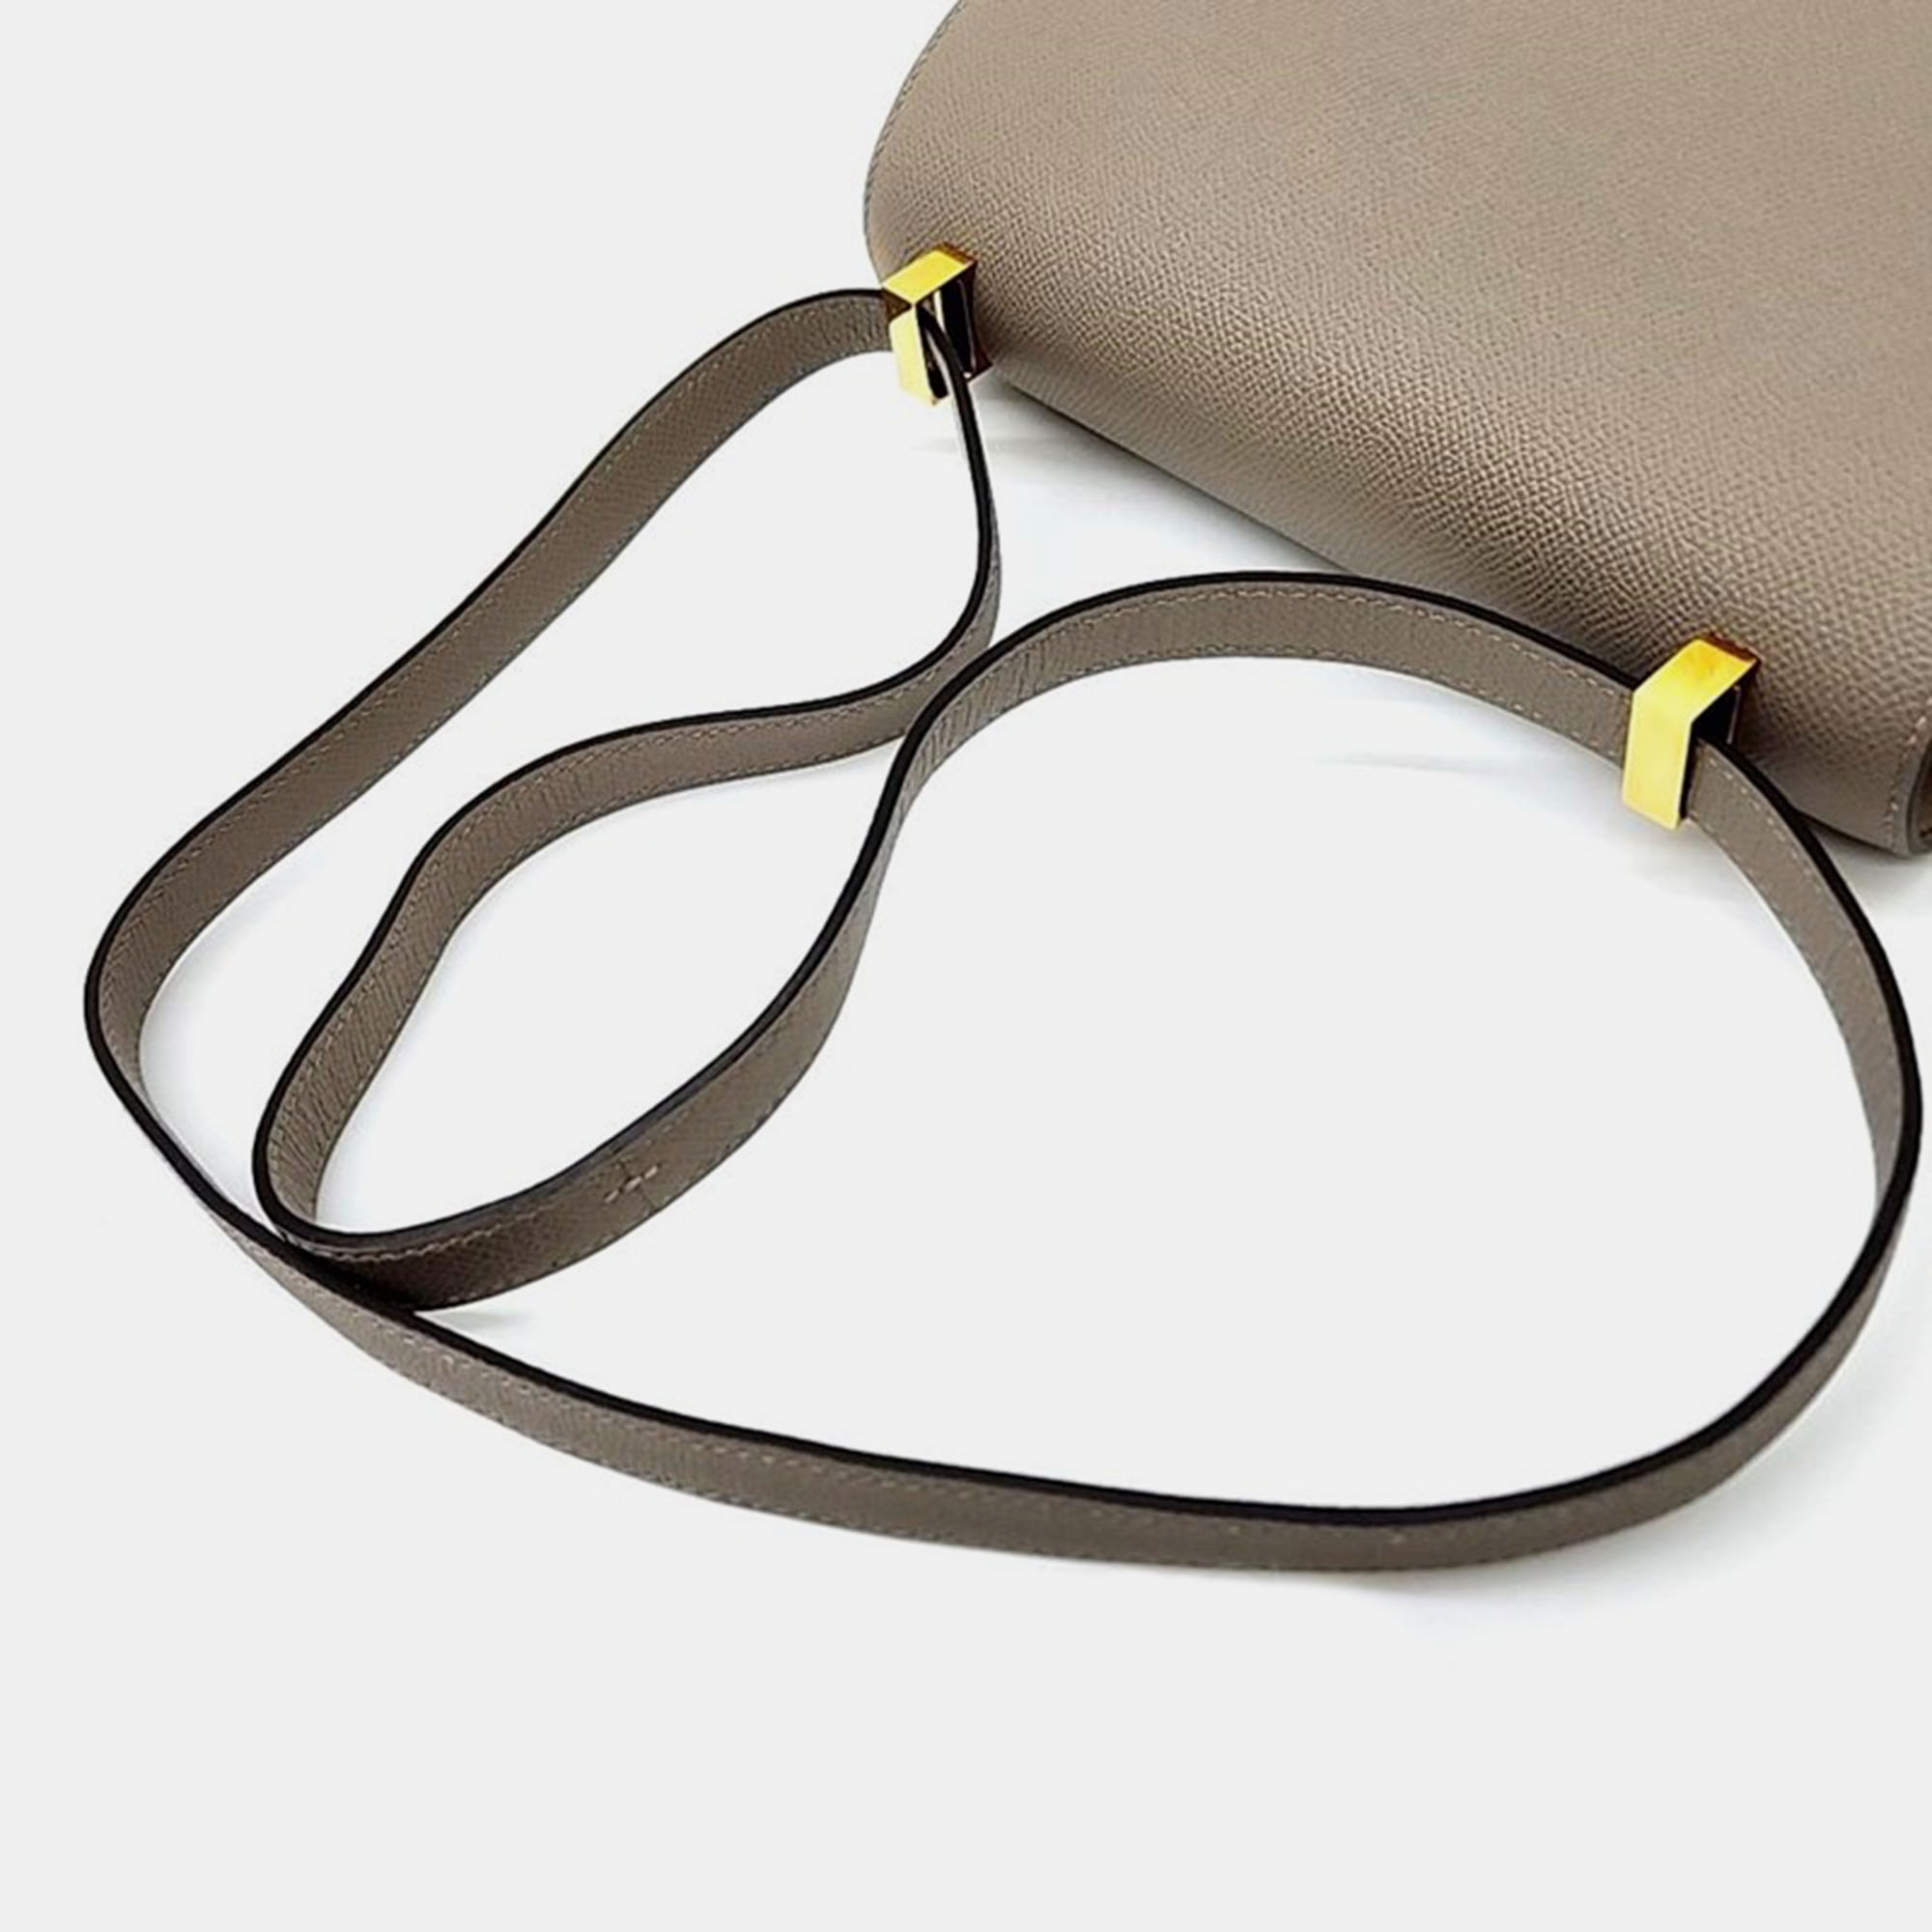 Hermes Grey Leather Constance 24 (C) Bag